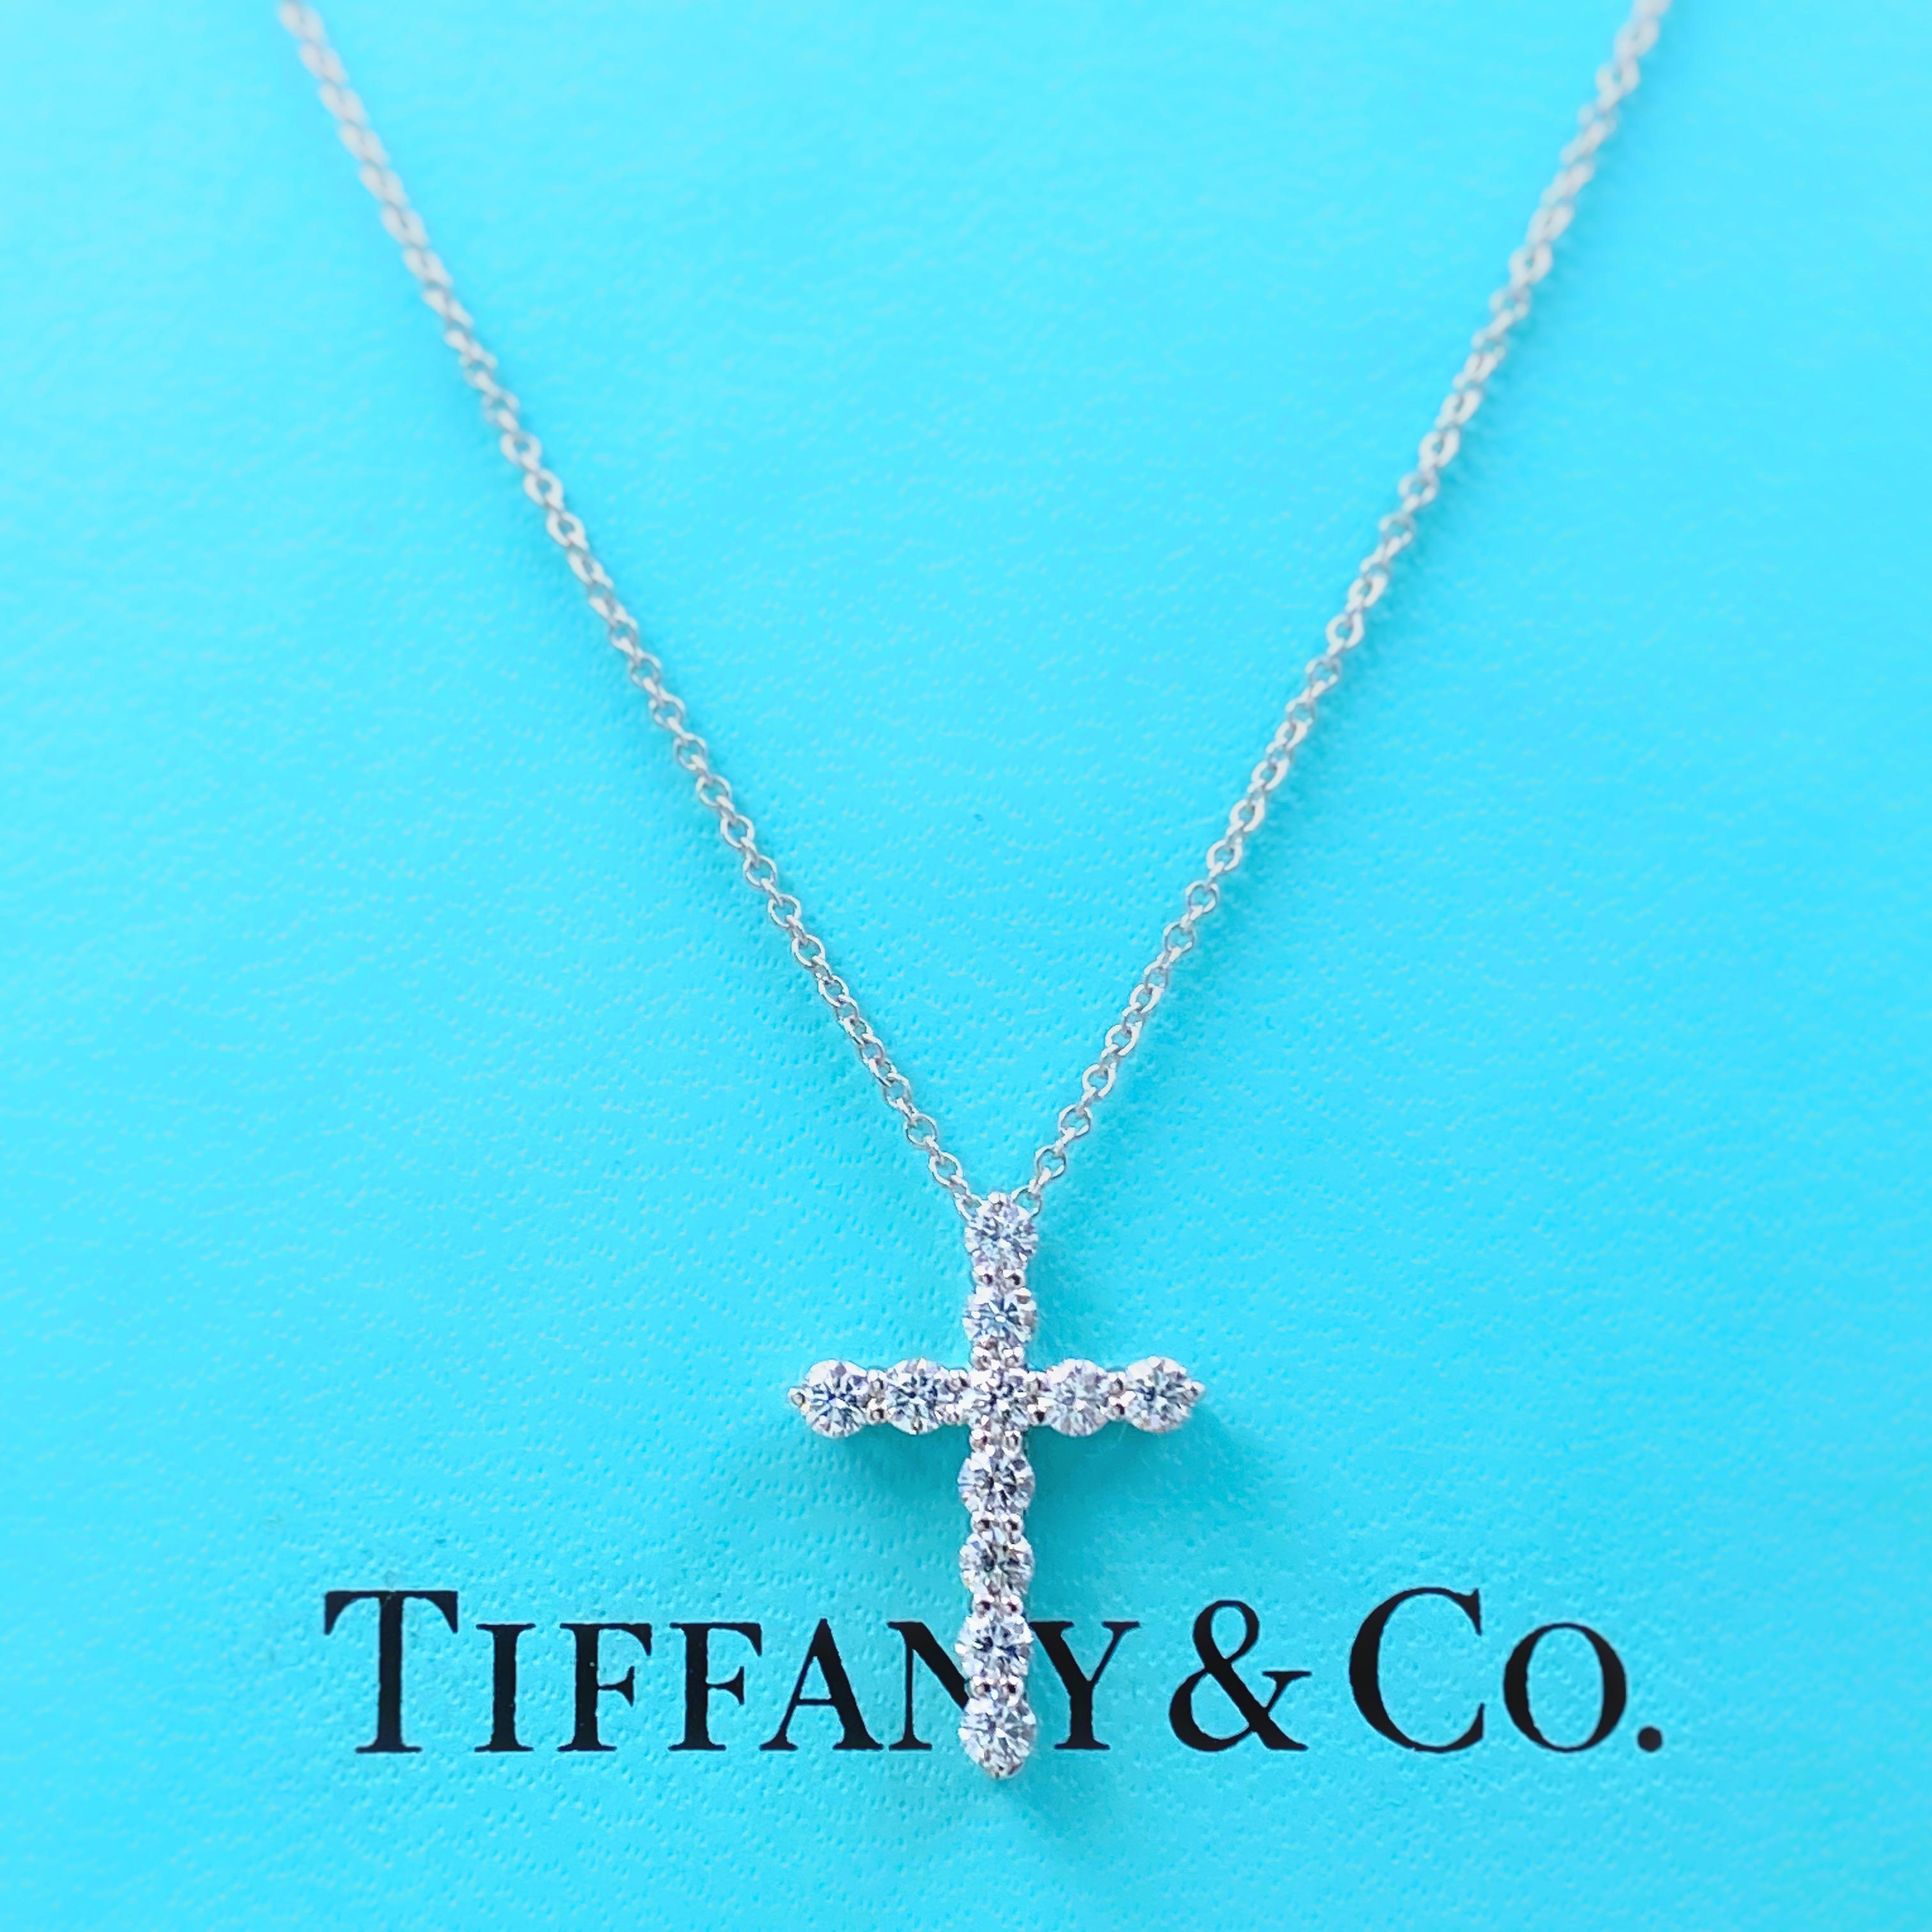 Tiffany & Co Diamond Cross Pendant
Style:  Small
Metal:  Platinum
Size:  16' Chain 
Measurements:  Pendant is .75 X .5 Inches
TCW:  0.47 tcw
Main Diamond:  11 Round Brilliant Cut Diamond
Color & Clarity:  G - VS1
Hallmark:  PT950